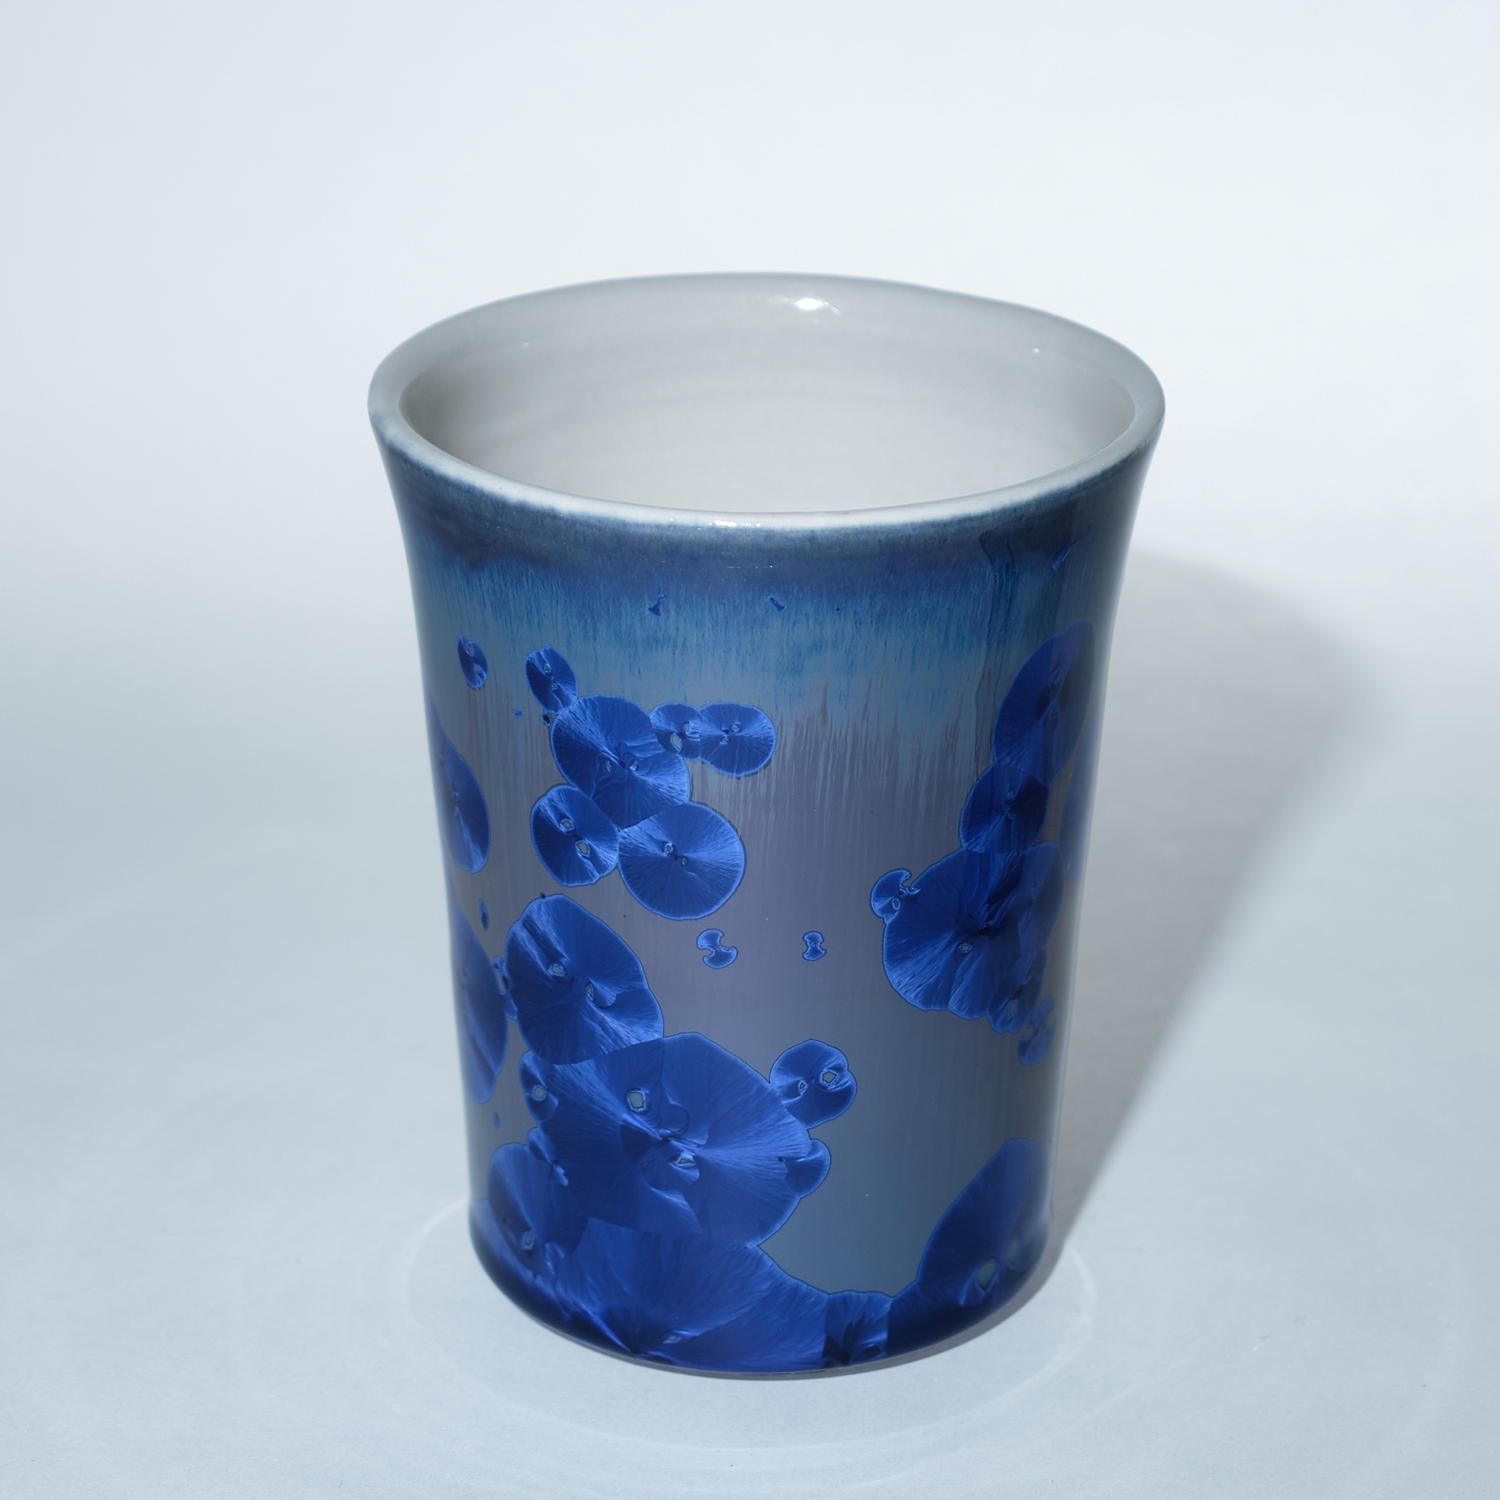 Yumiko Katsuya: Royal Blue Tumbler Product Image 1 of 1